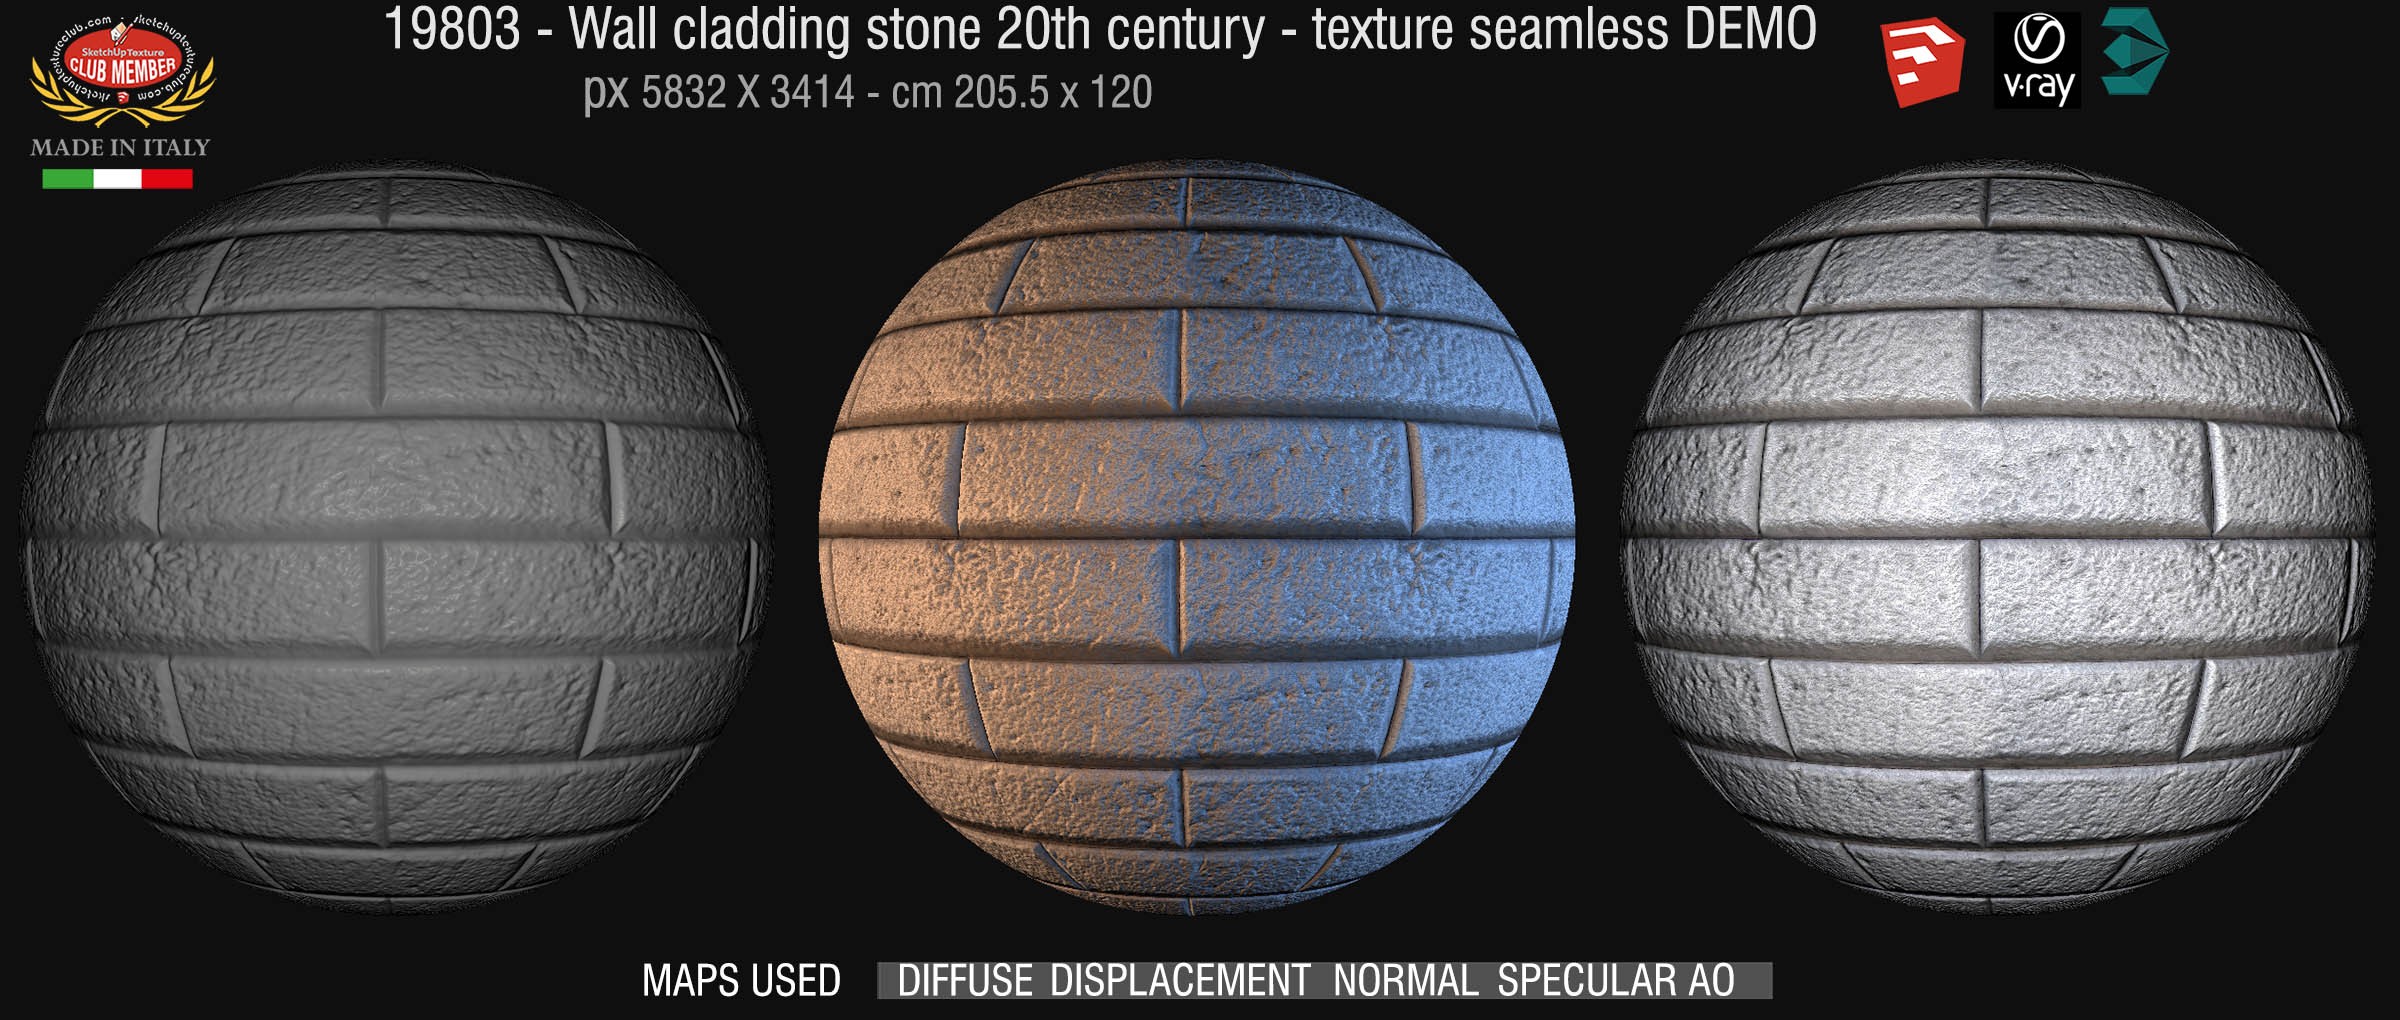 19803 wall cladding stone 20th century texture + maps demo